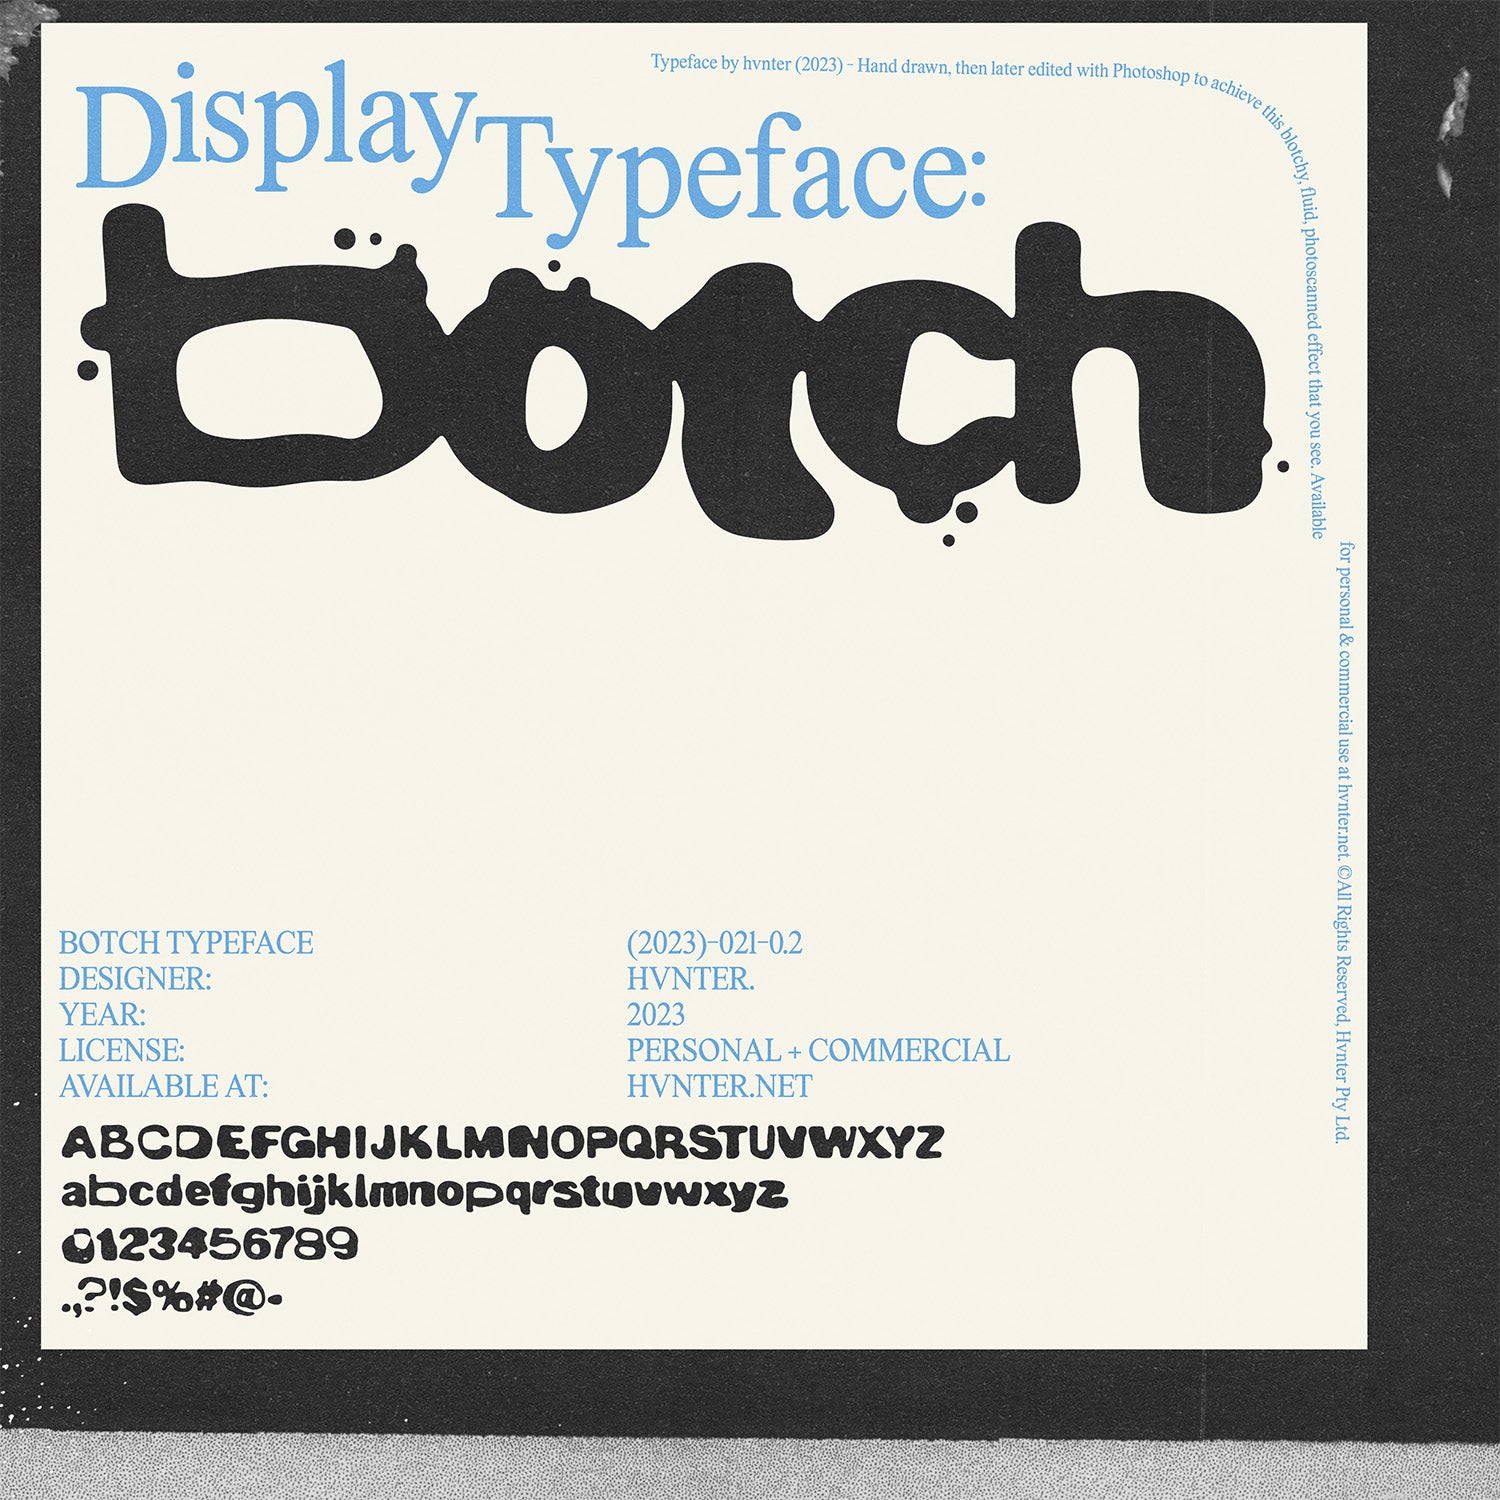 BOTCH Typeface